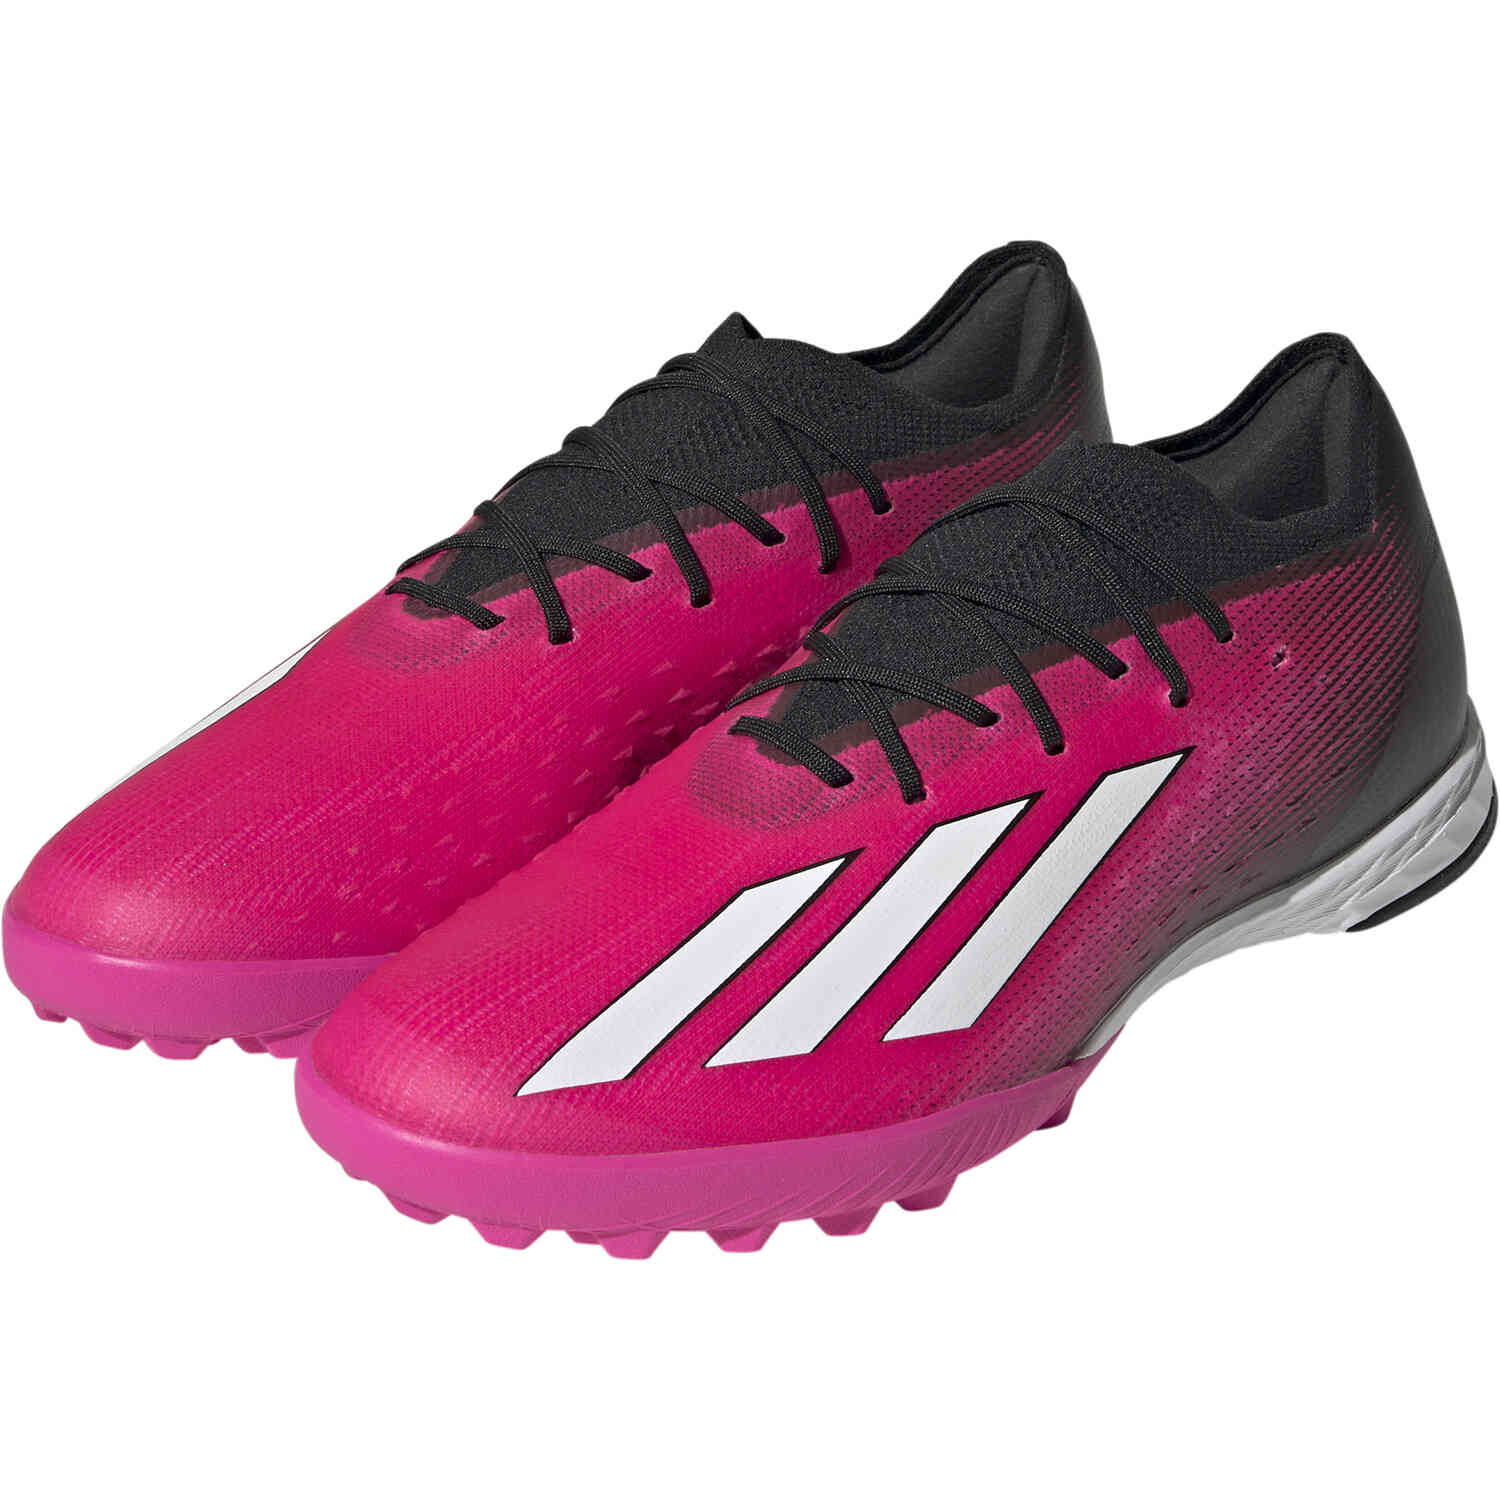 adidas Turf Soccer Shoes - adidas Mundial Team - SoccerPro.com